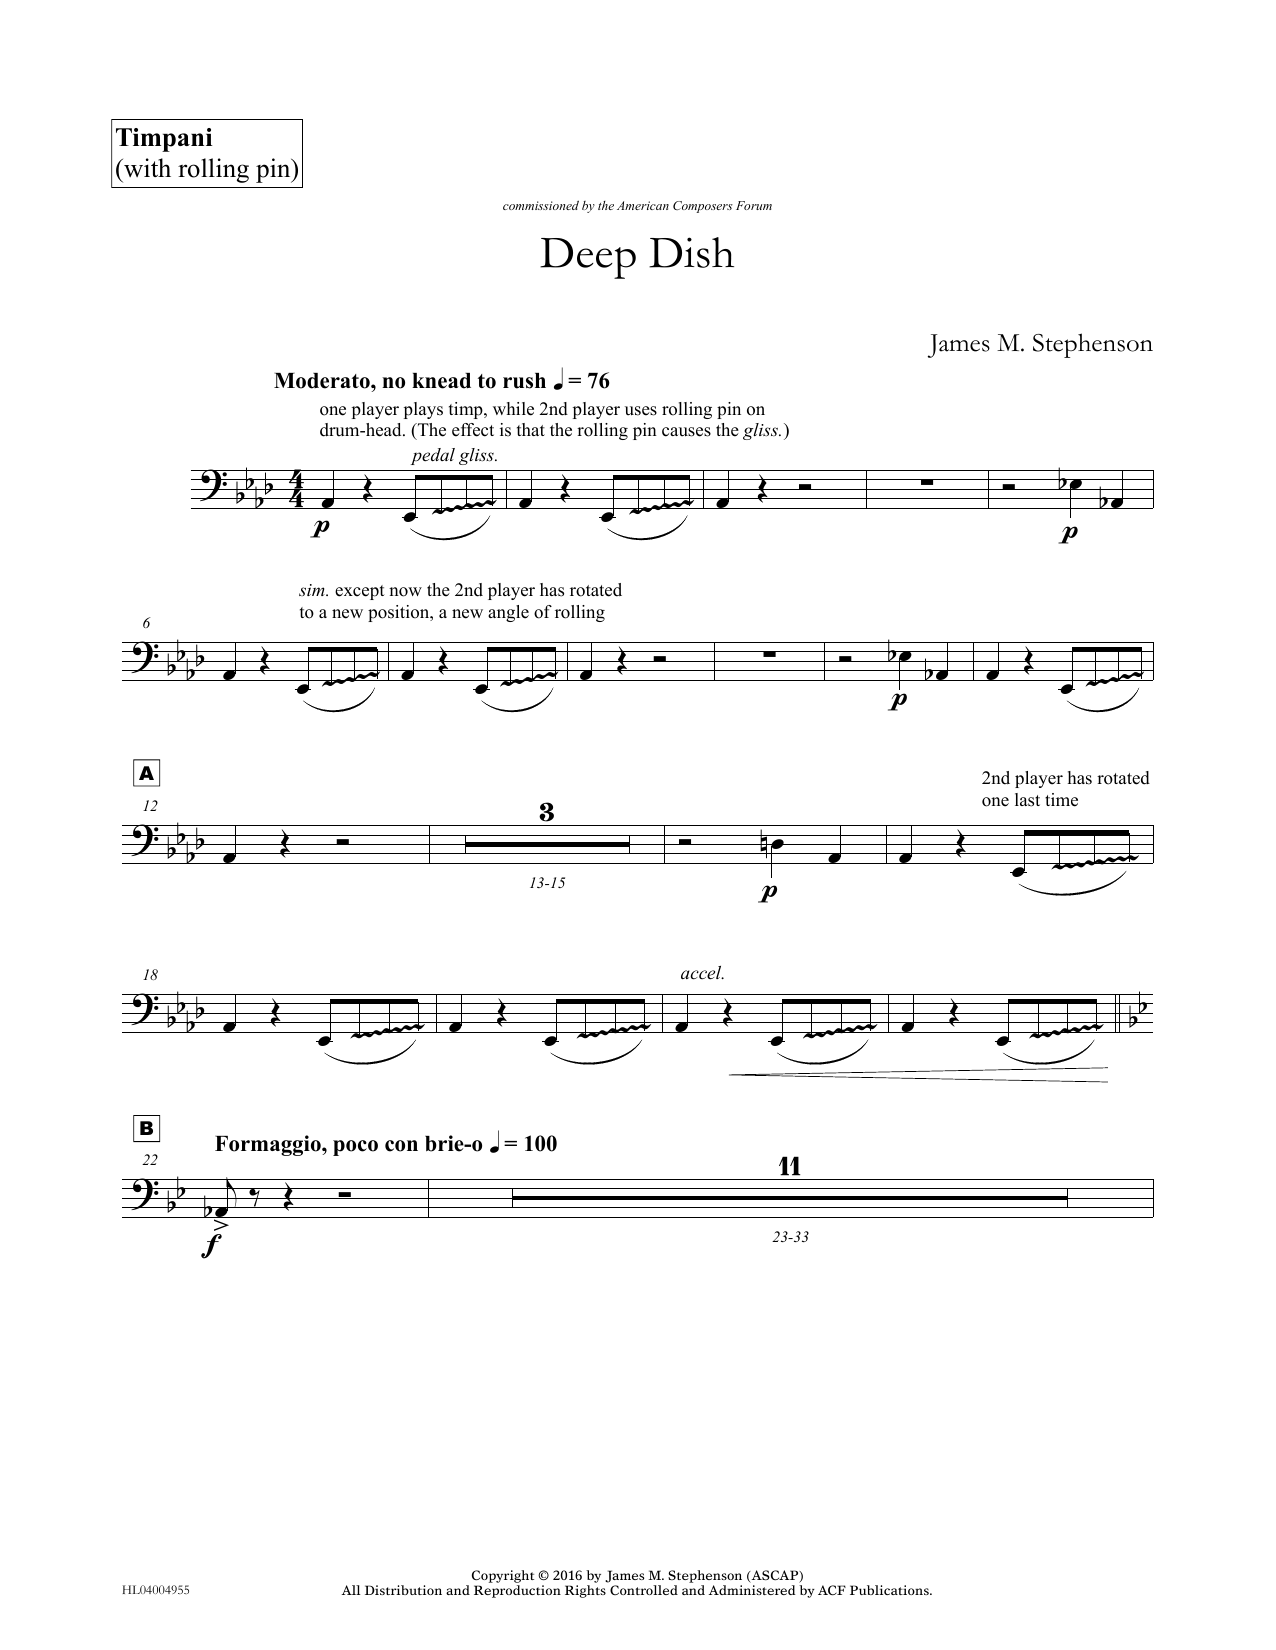 Download James (Jim) M. Stephenson Deep Dish - Timpani Sheet Music